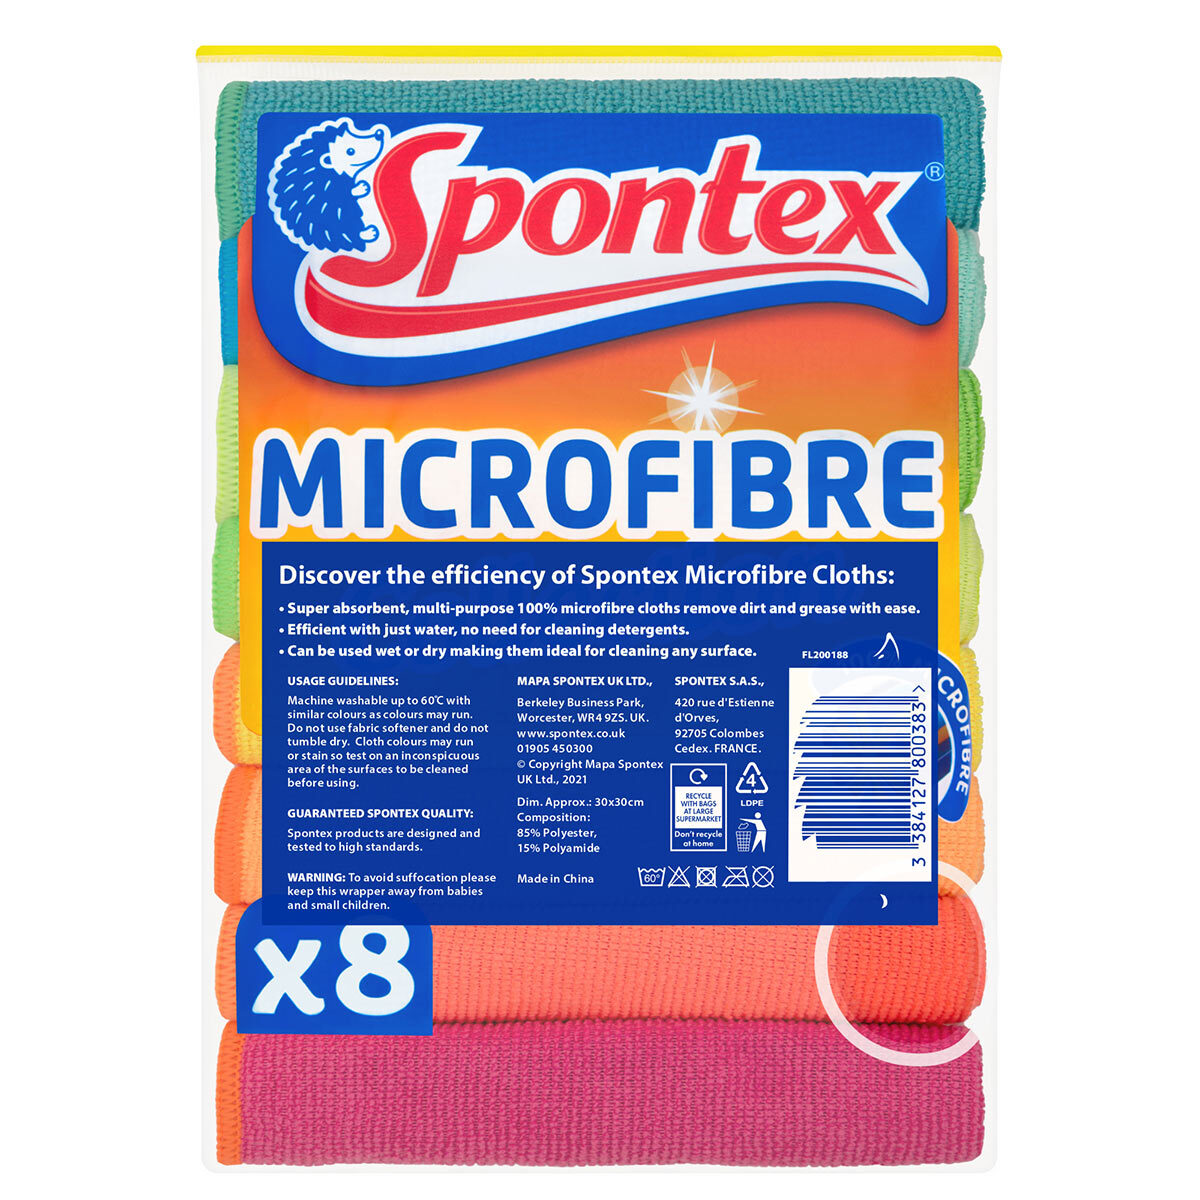 Spontex Microfibre Cloths, 24 Pack